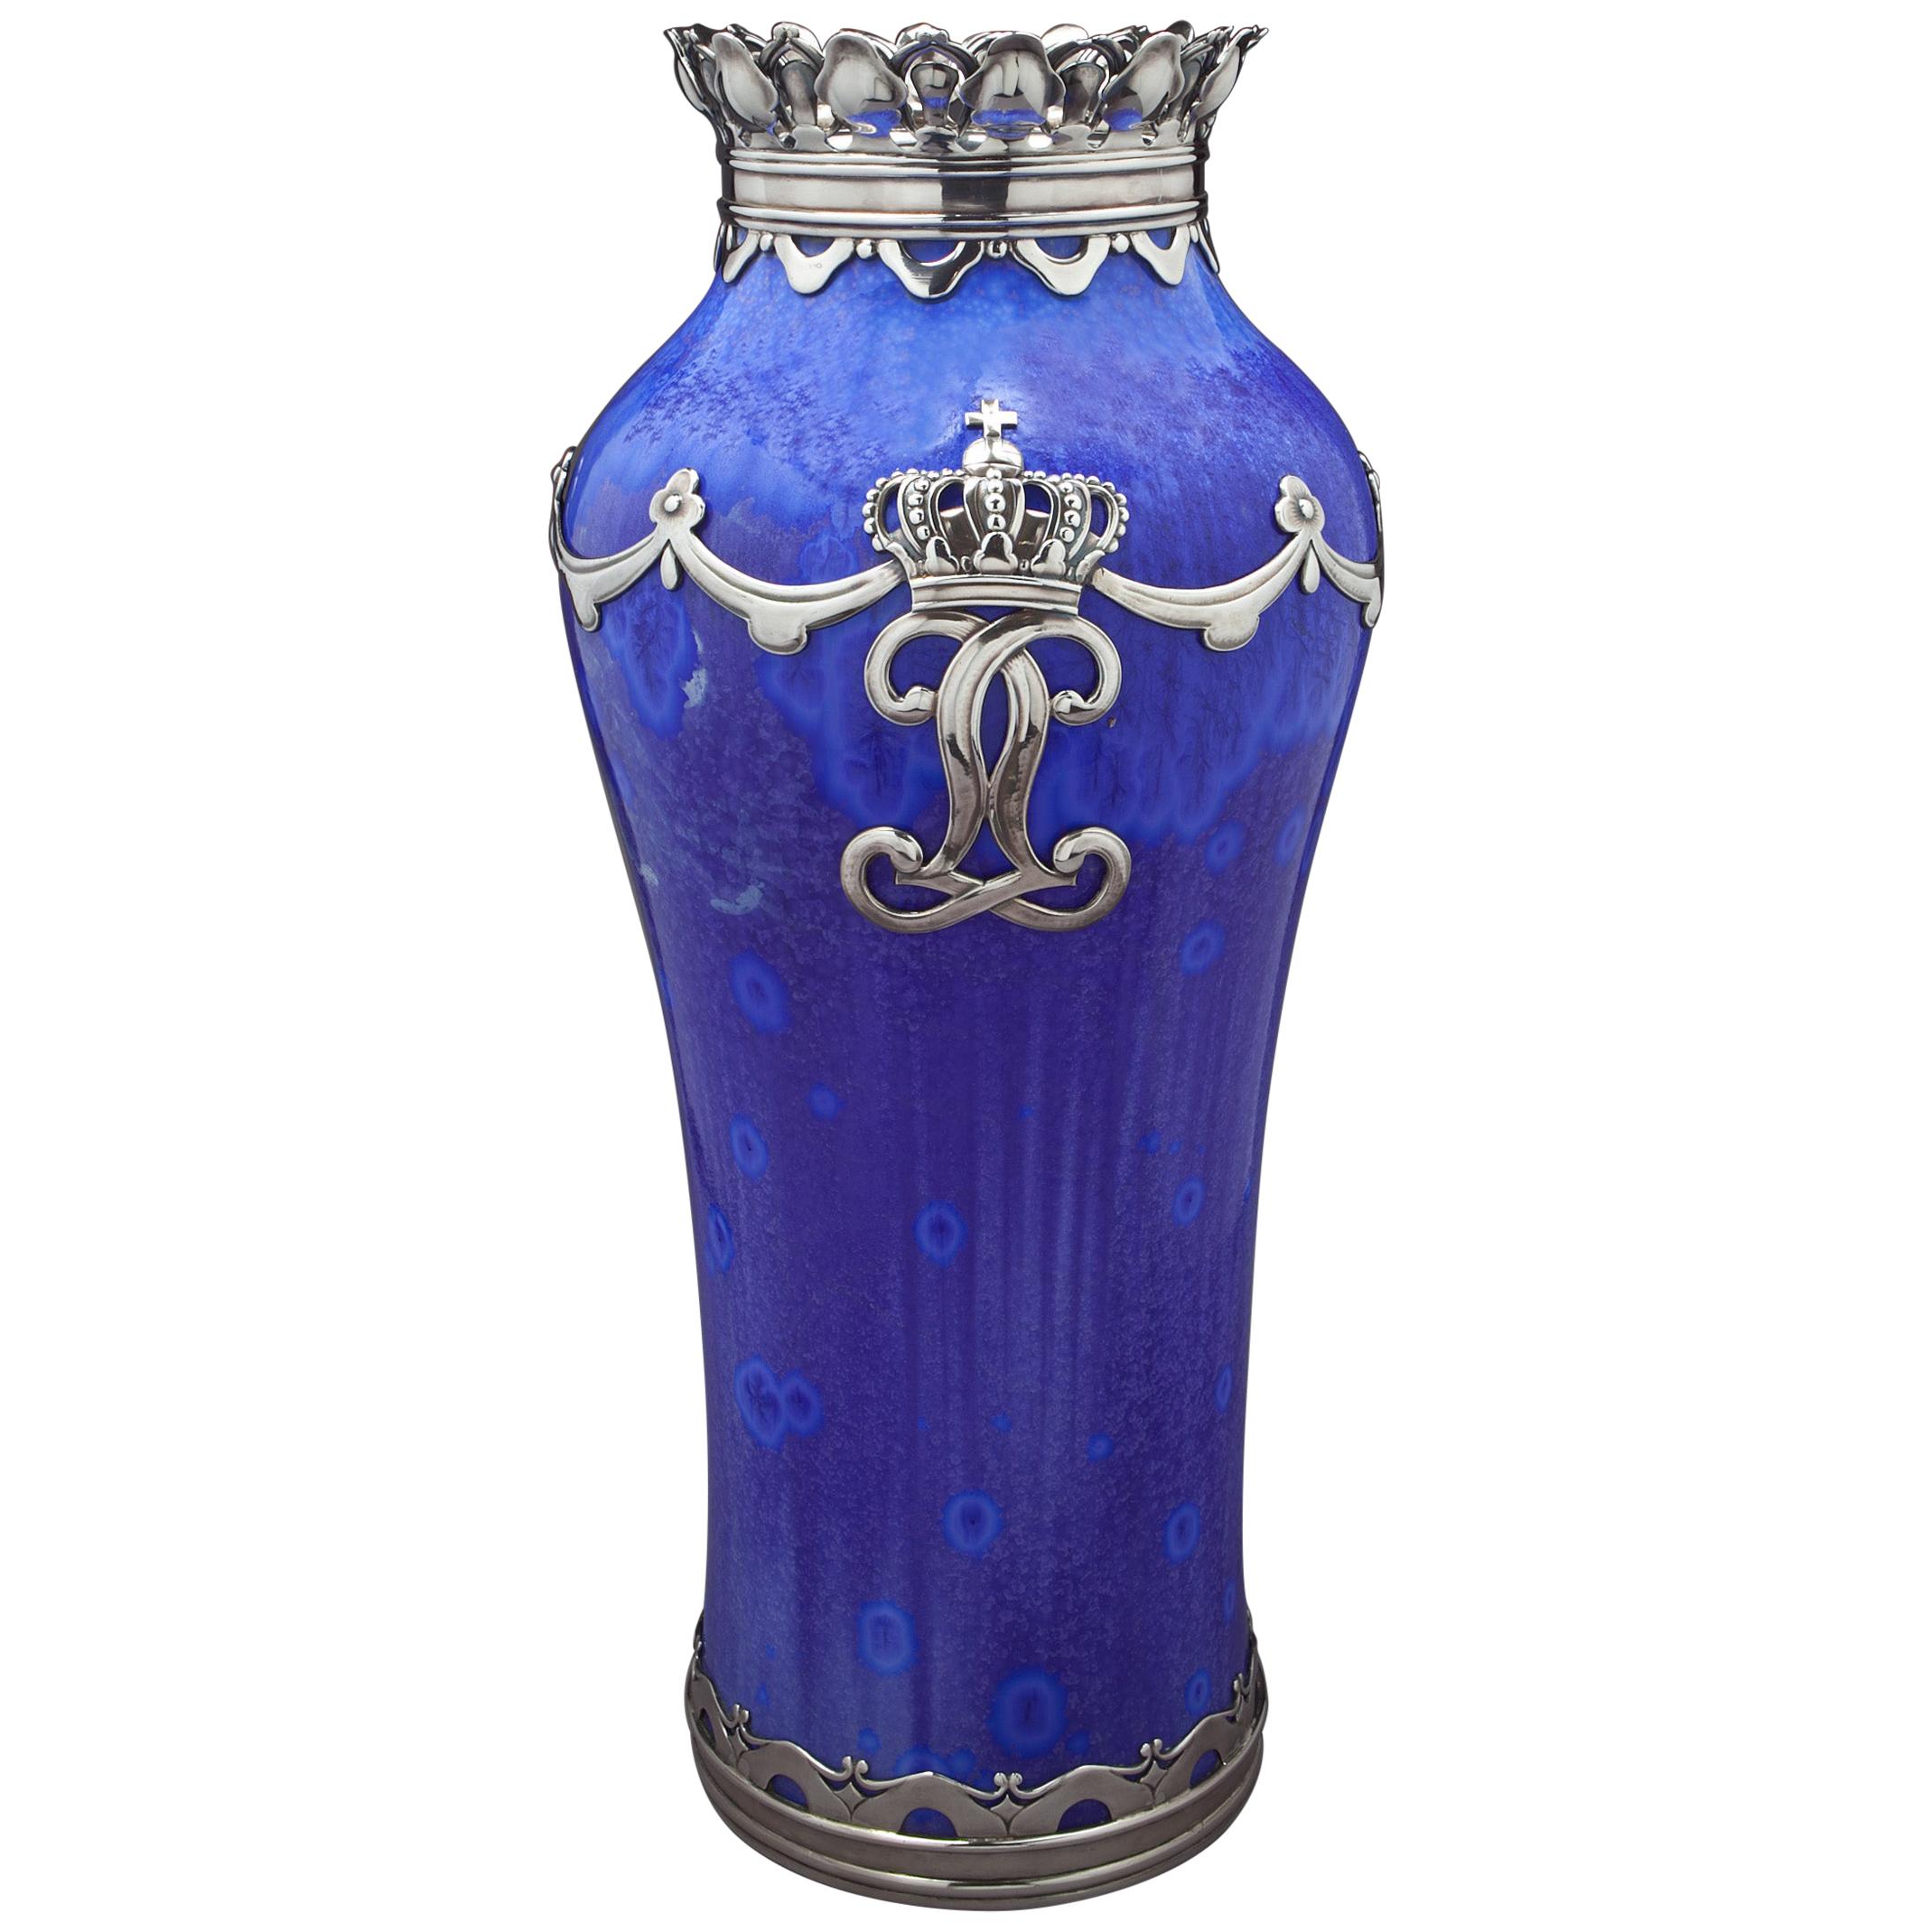 Silver Mounted Royal Copenhagen Crystalline Royal Presentation Vase, Dated 1915